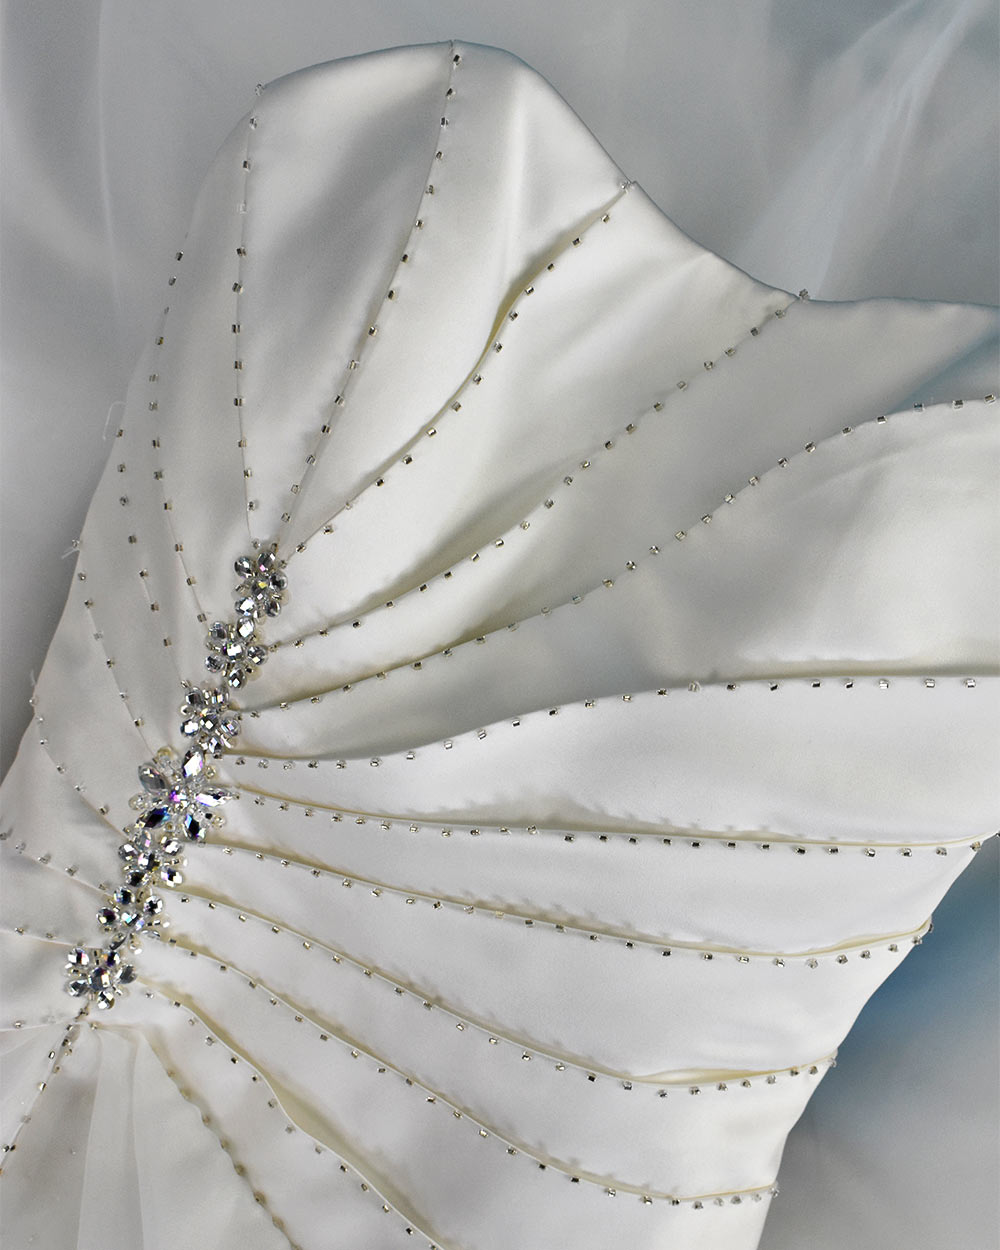 Mark Lesley Ivory Strapless Princess Wedding Dress Size 14